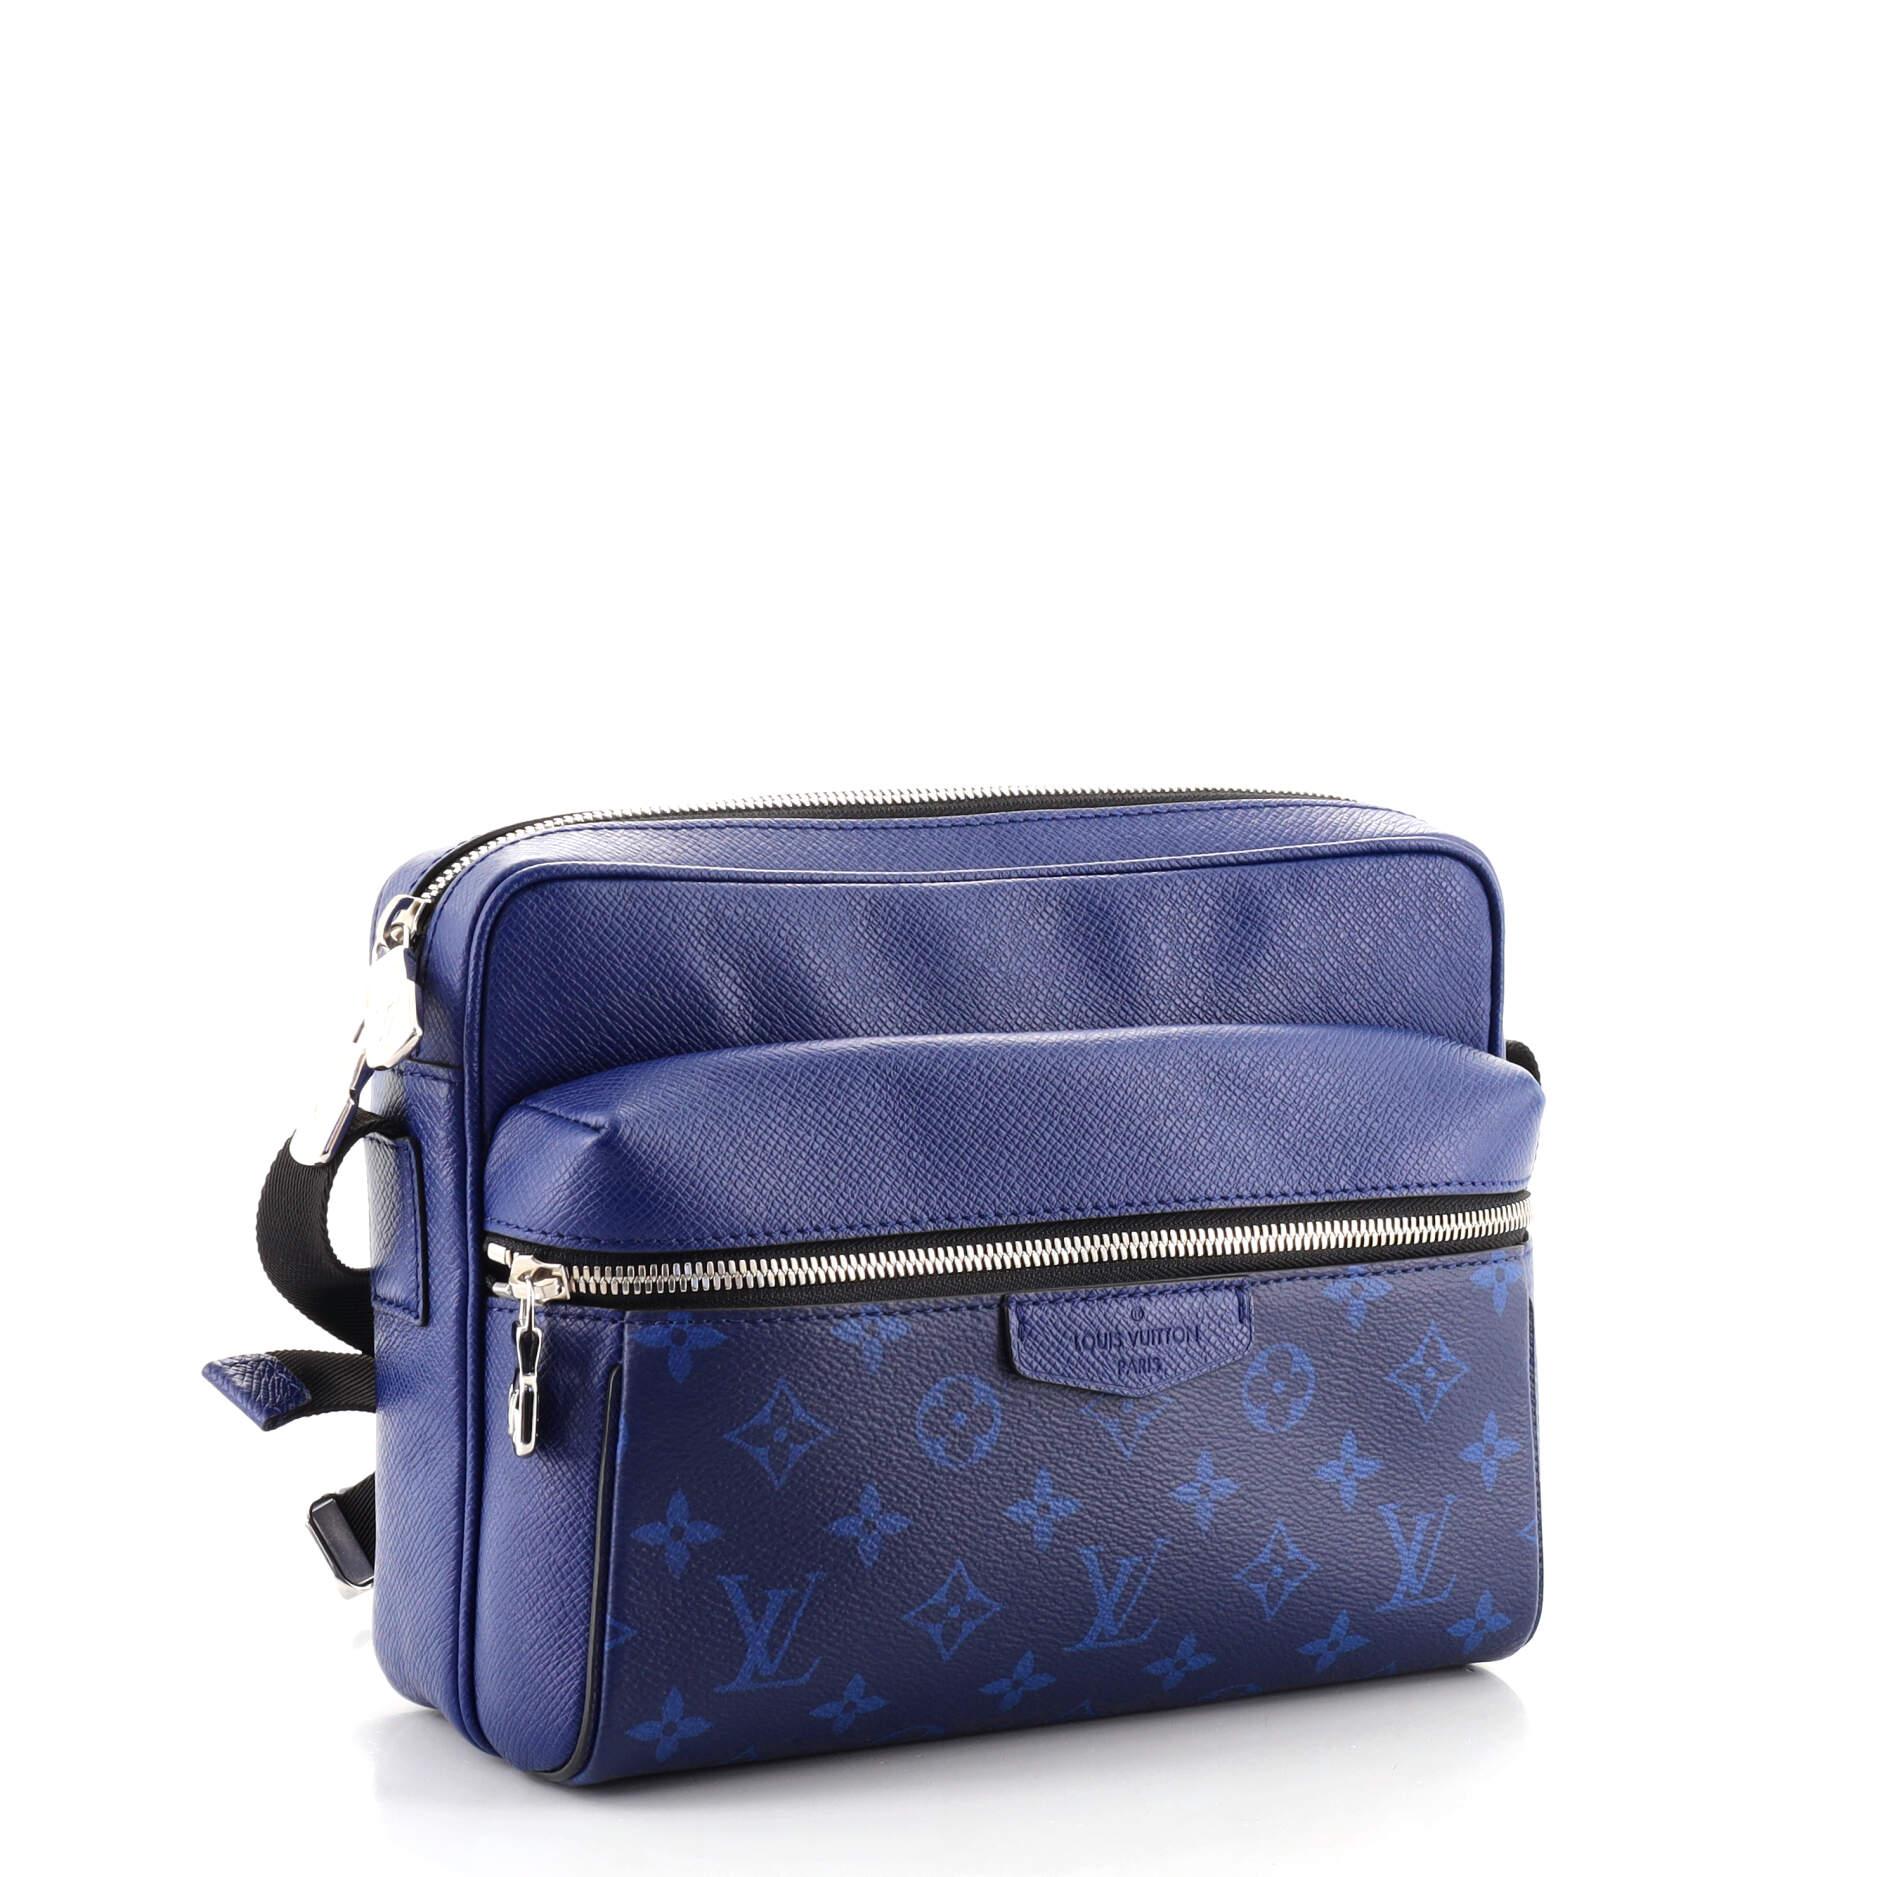 lv outdoor messenger bag blue